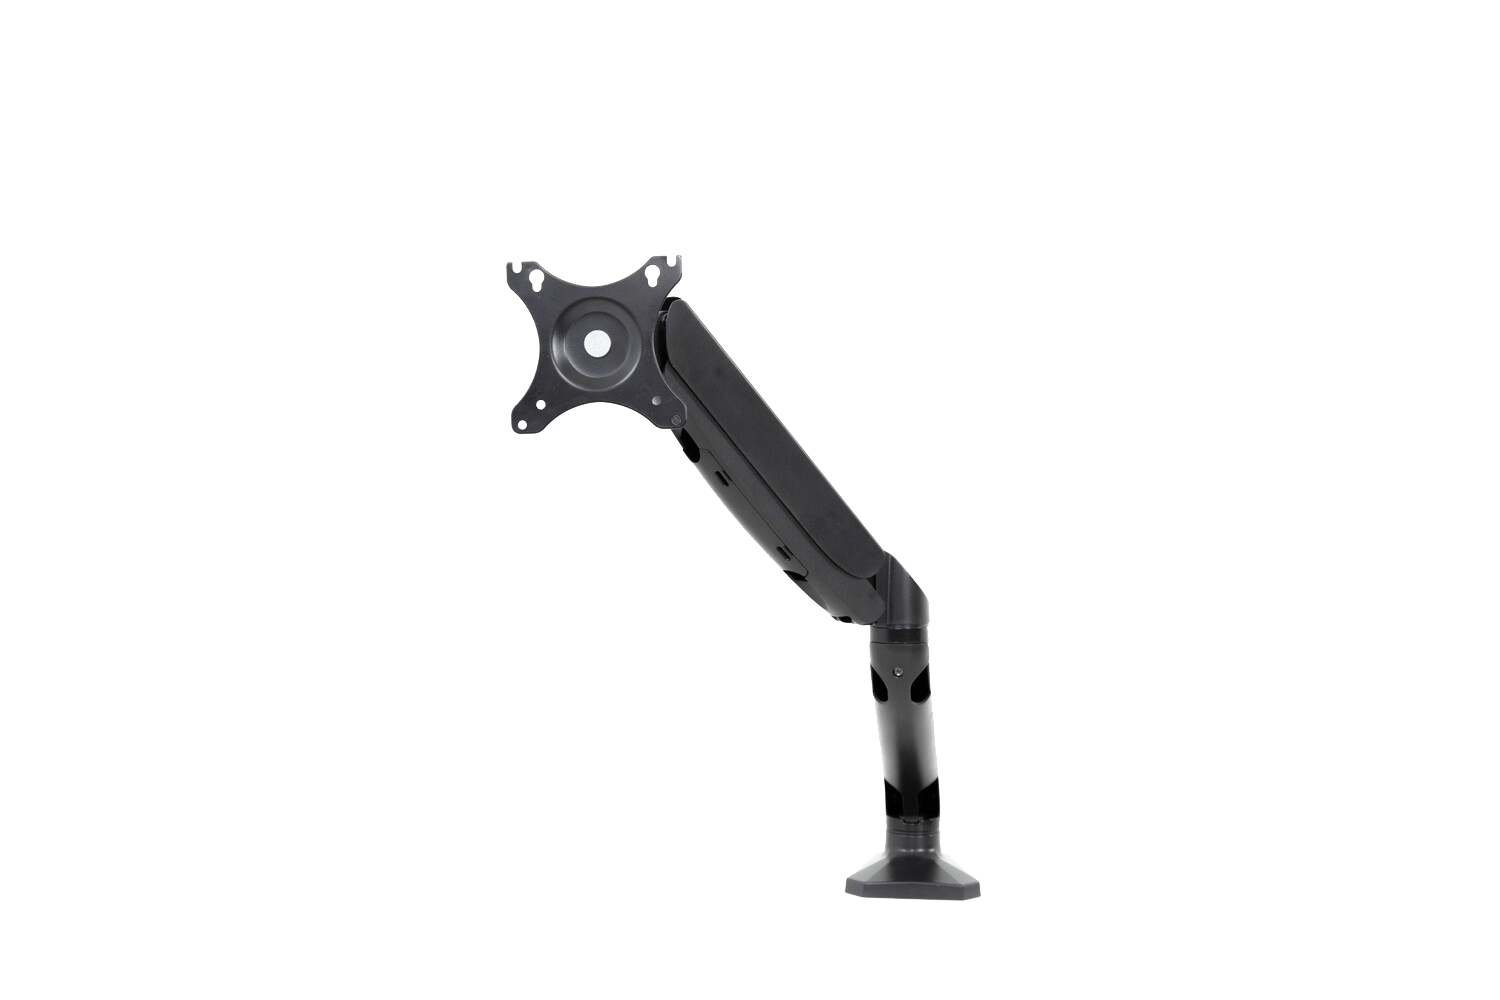 EVIS Gas Strut Monitor Desktop Arm Desk Mount (Single Arm/Dual Arm) 10~27” Inch